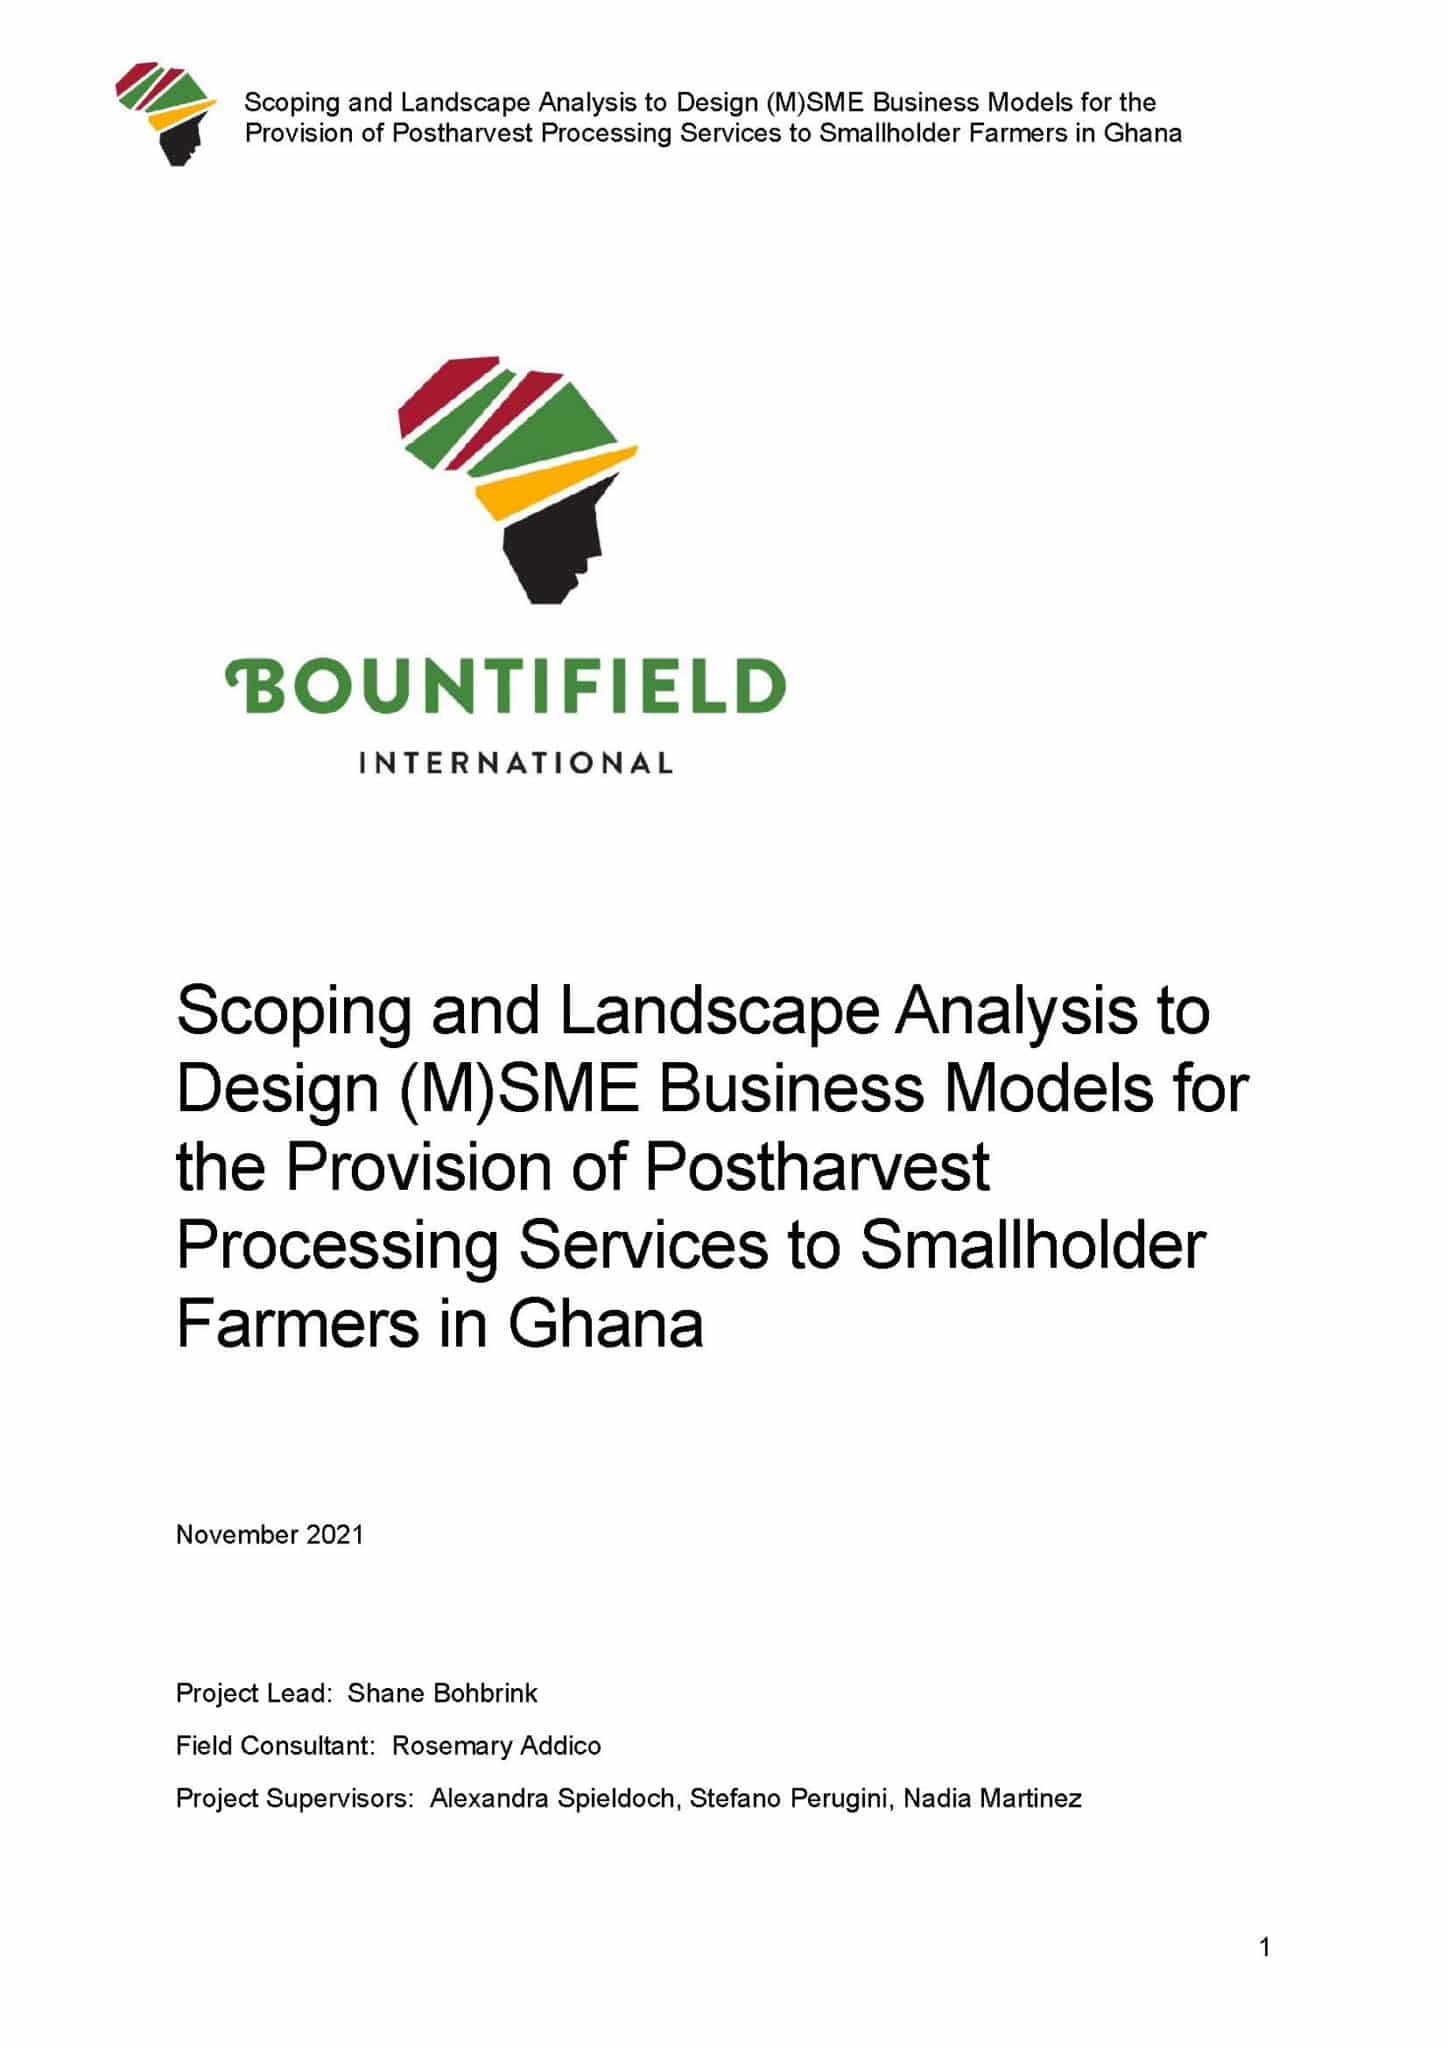 November 2021 Bountifield International, "Scoping and Landscape Analysis: Ghana"